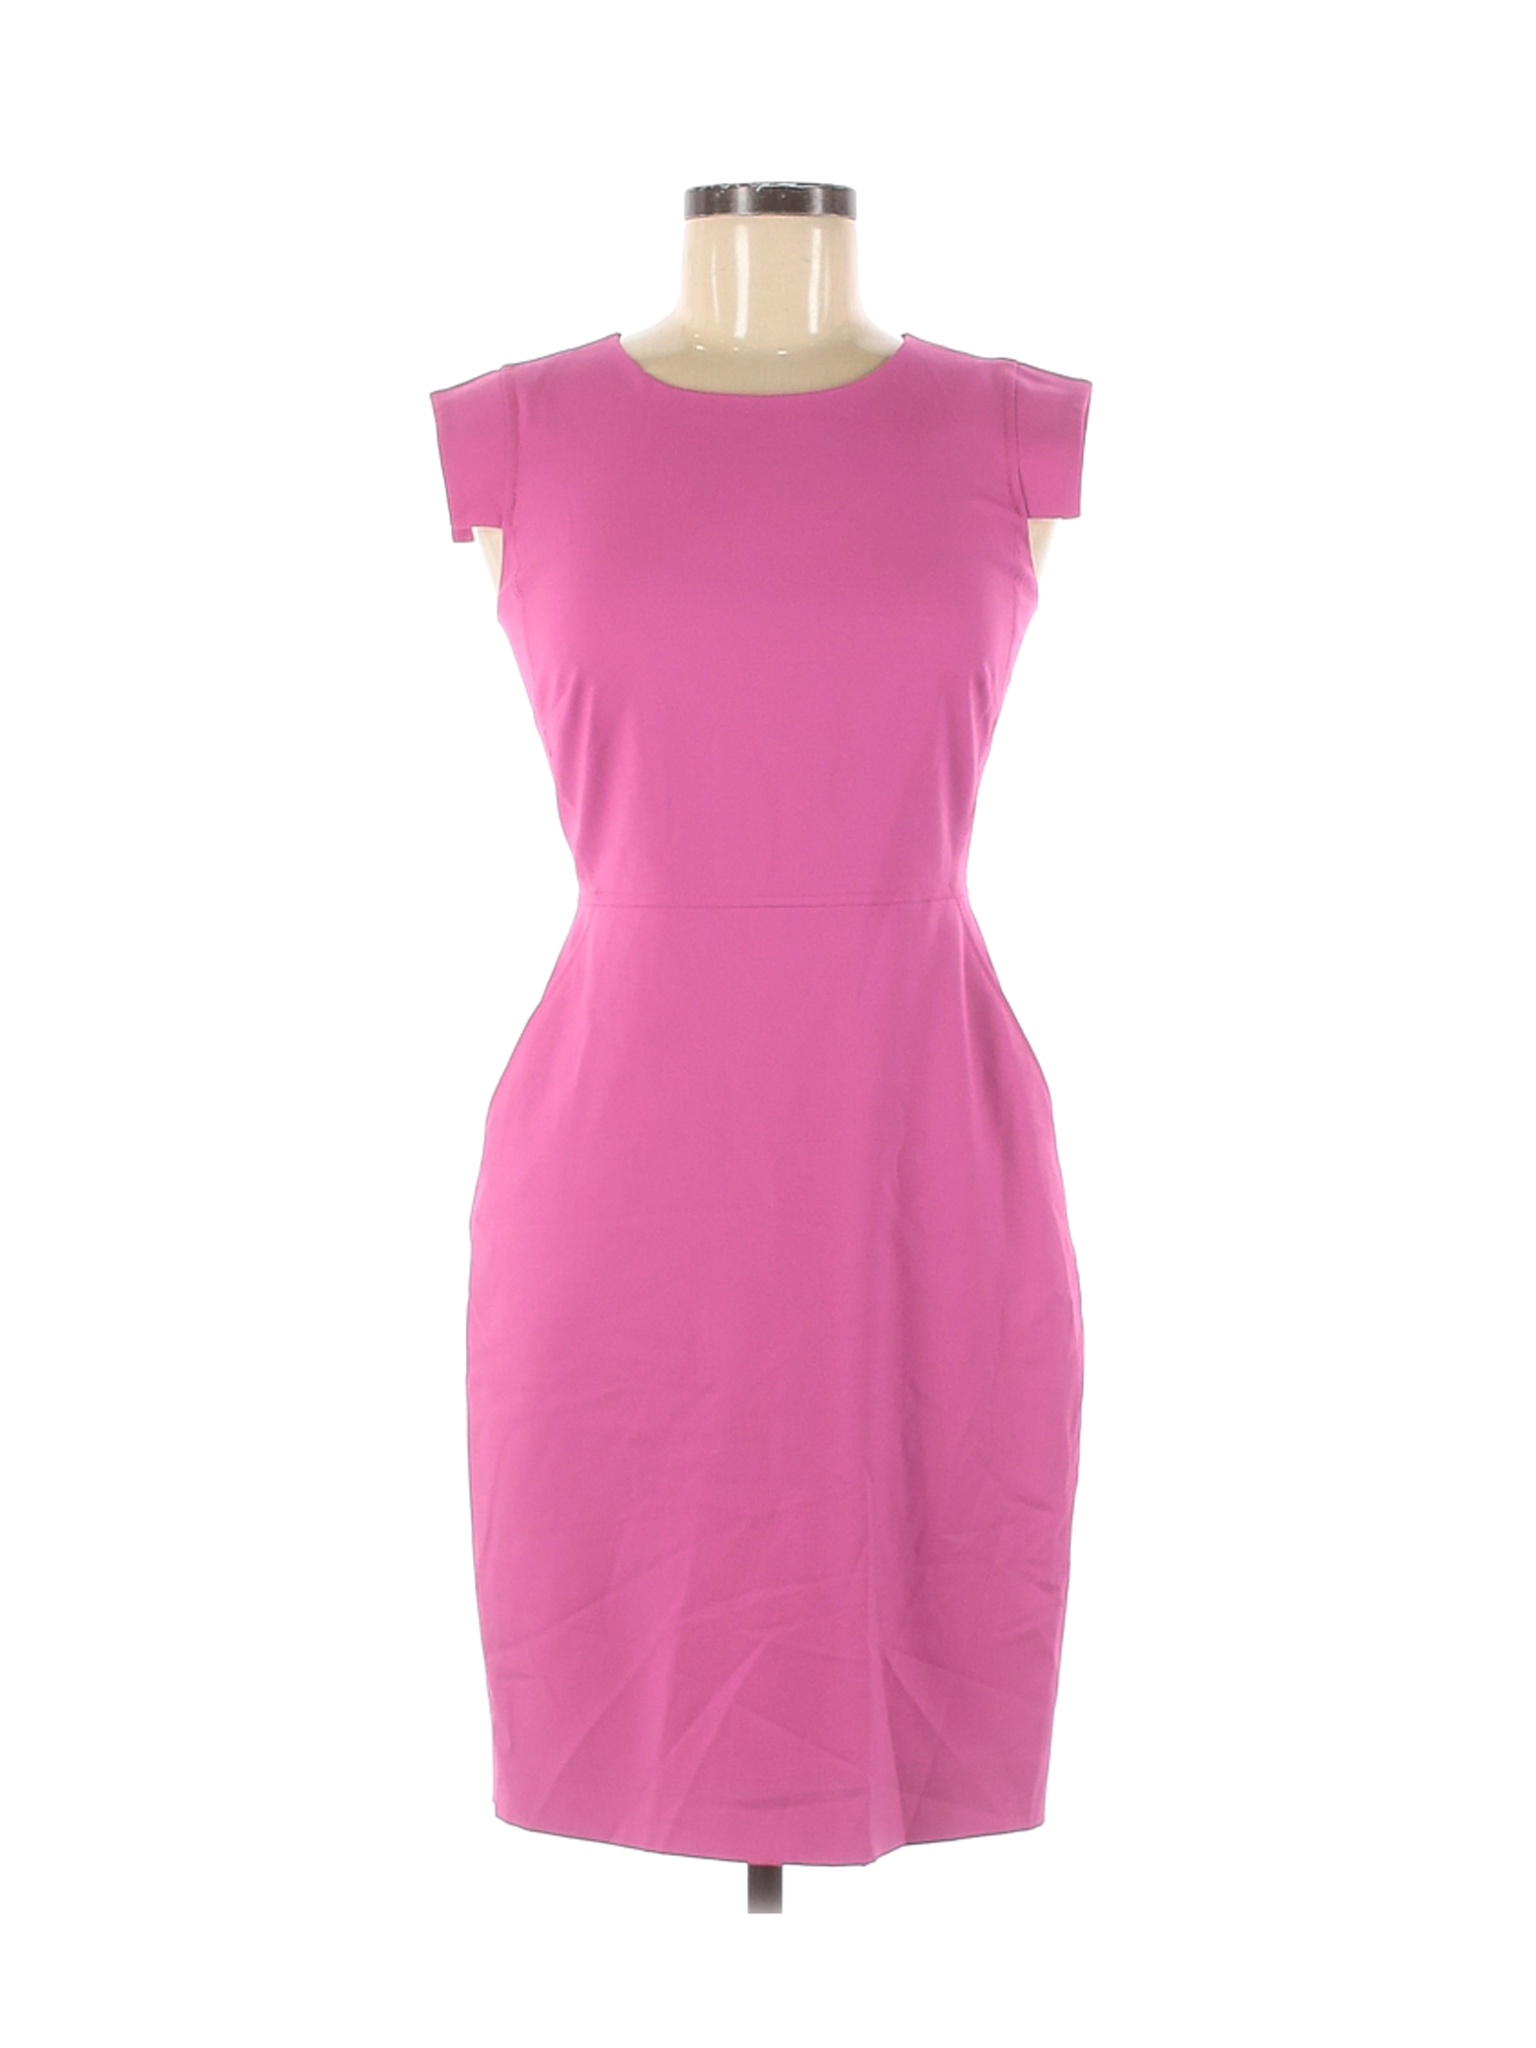 J.Crew Women Pink Casual Dress 2 Petites | eBay